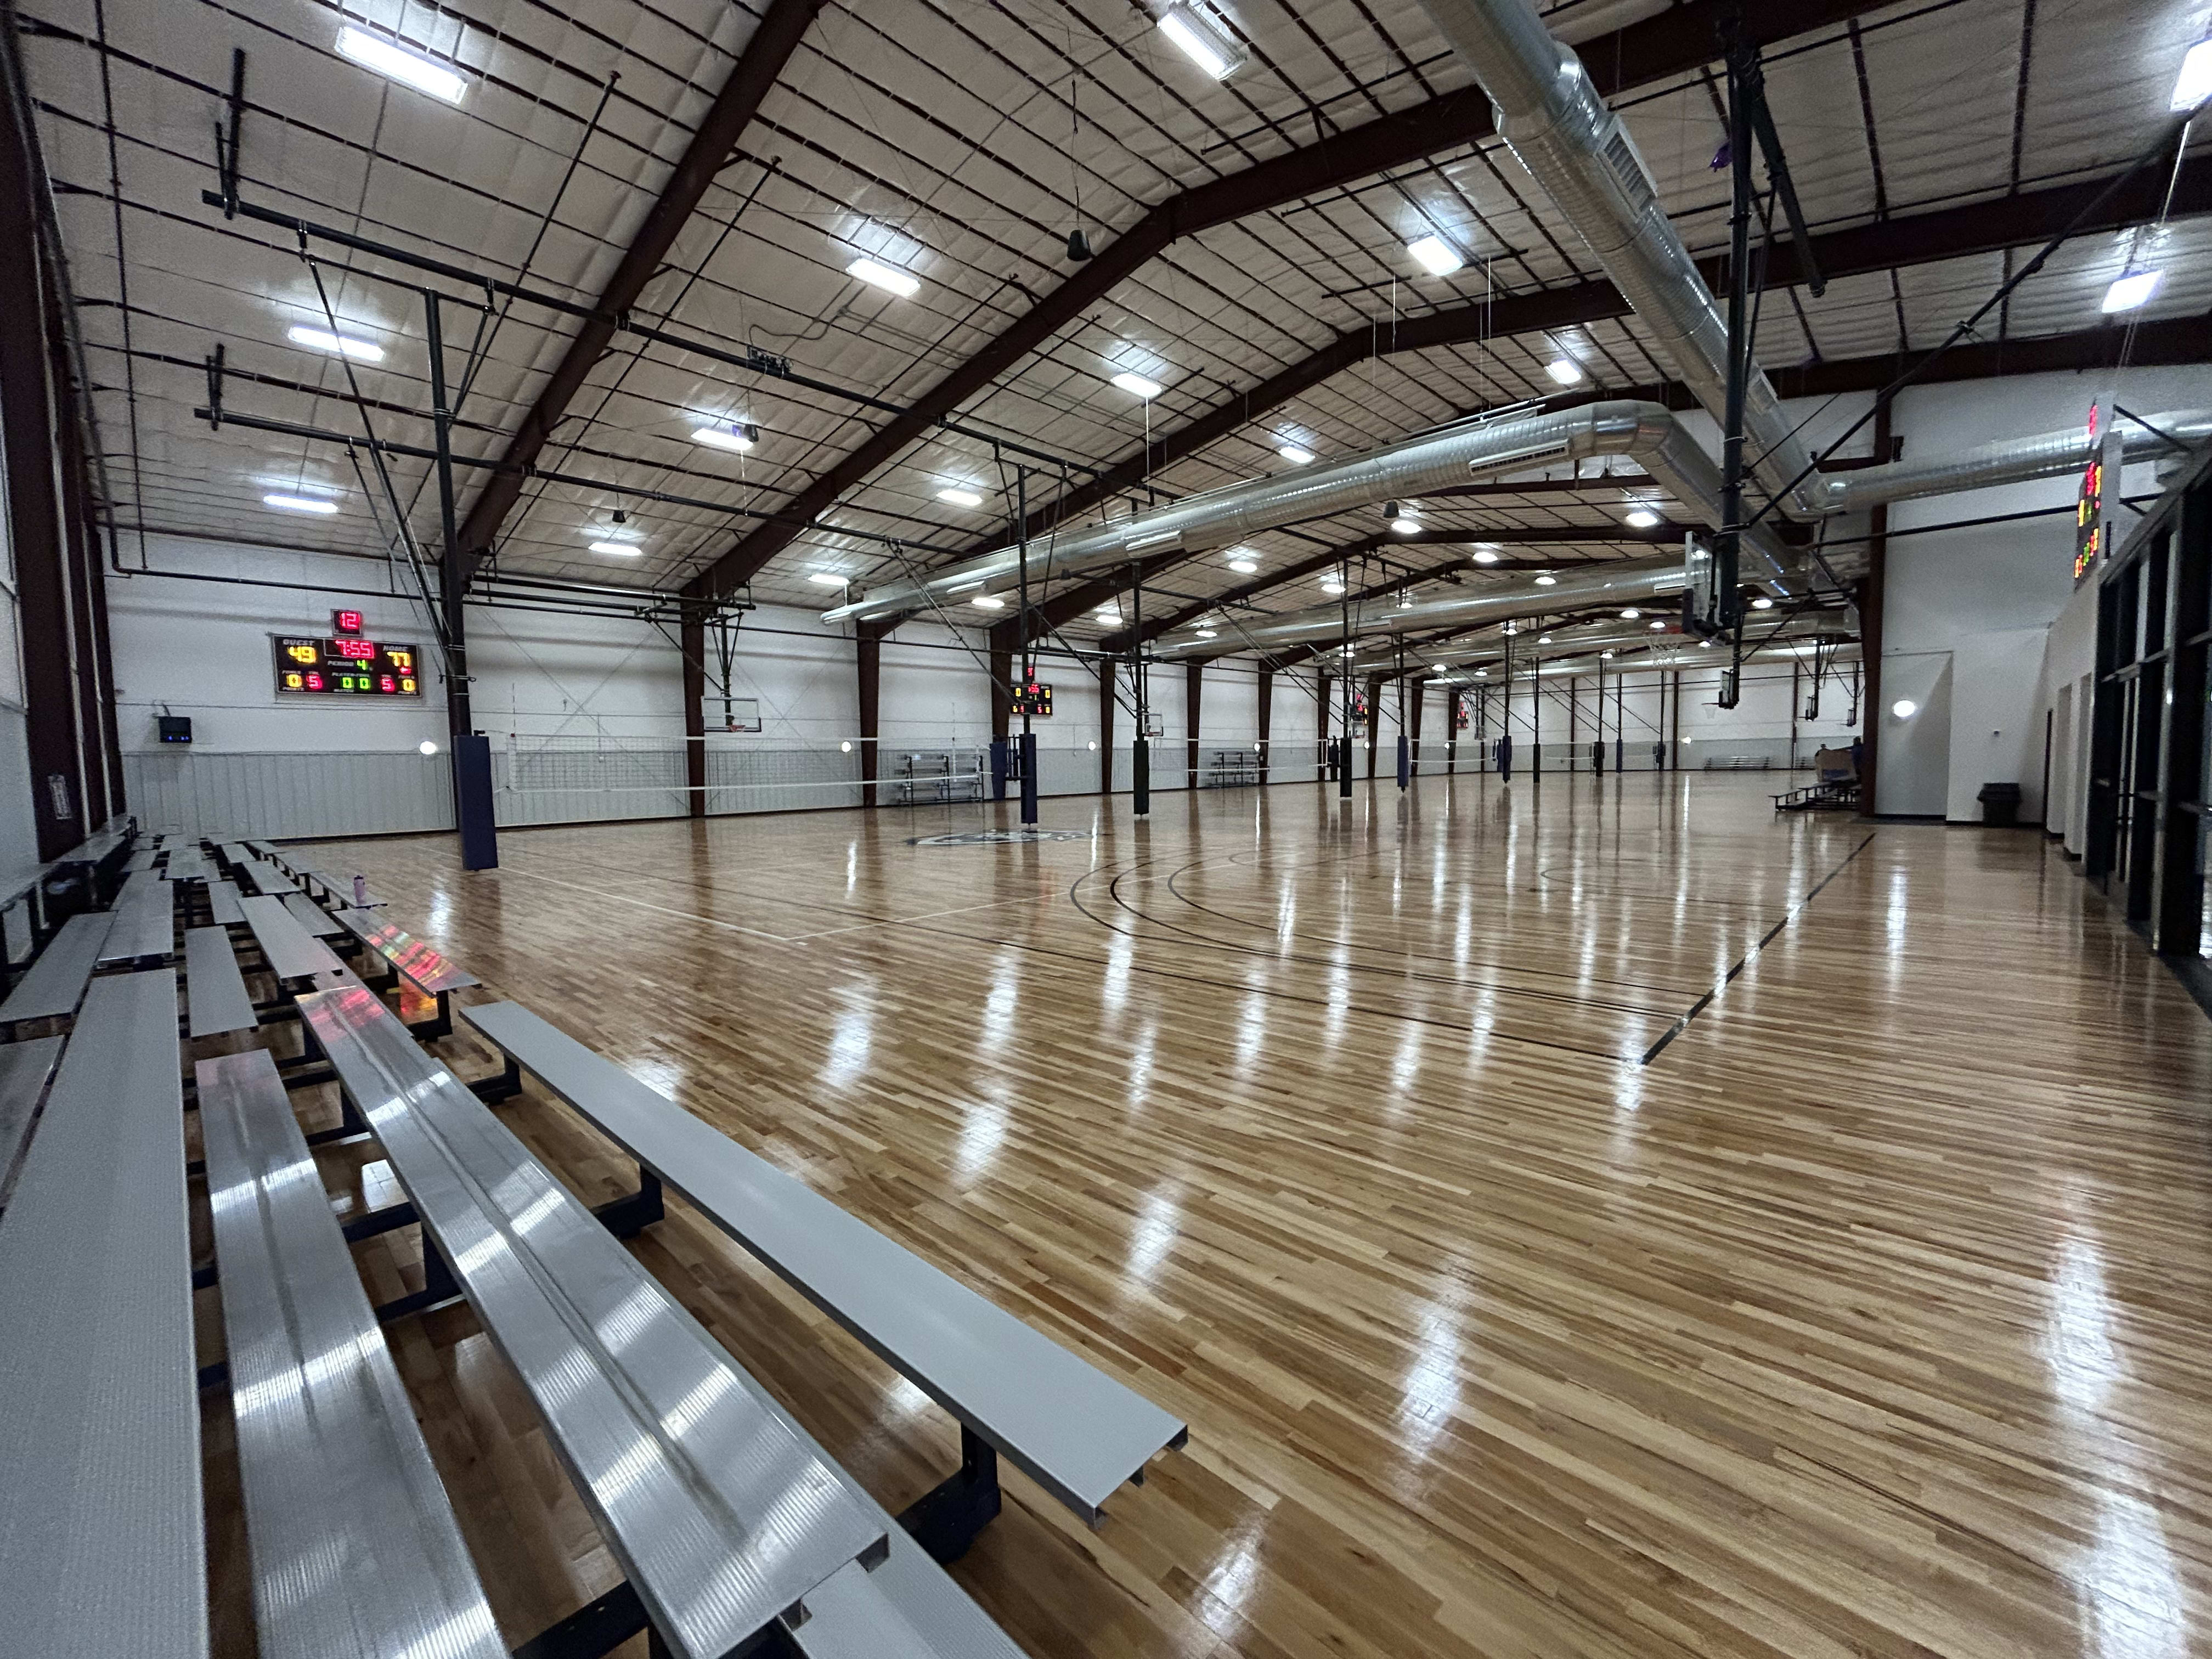 A new era of athletic training at IMPACT Center, Arlington